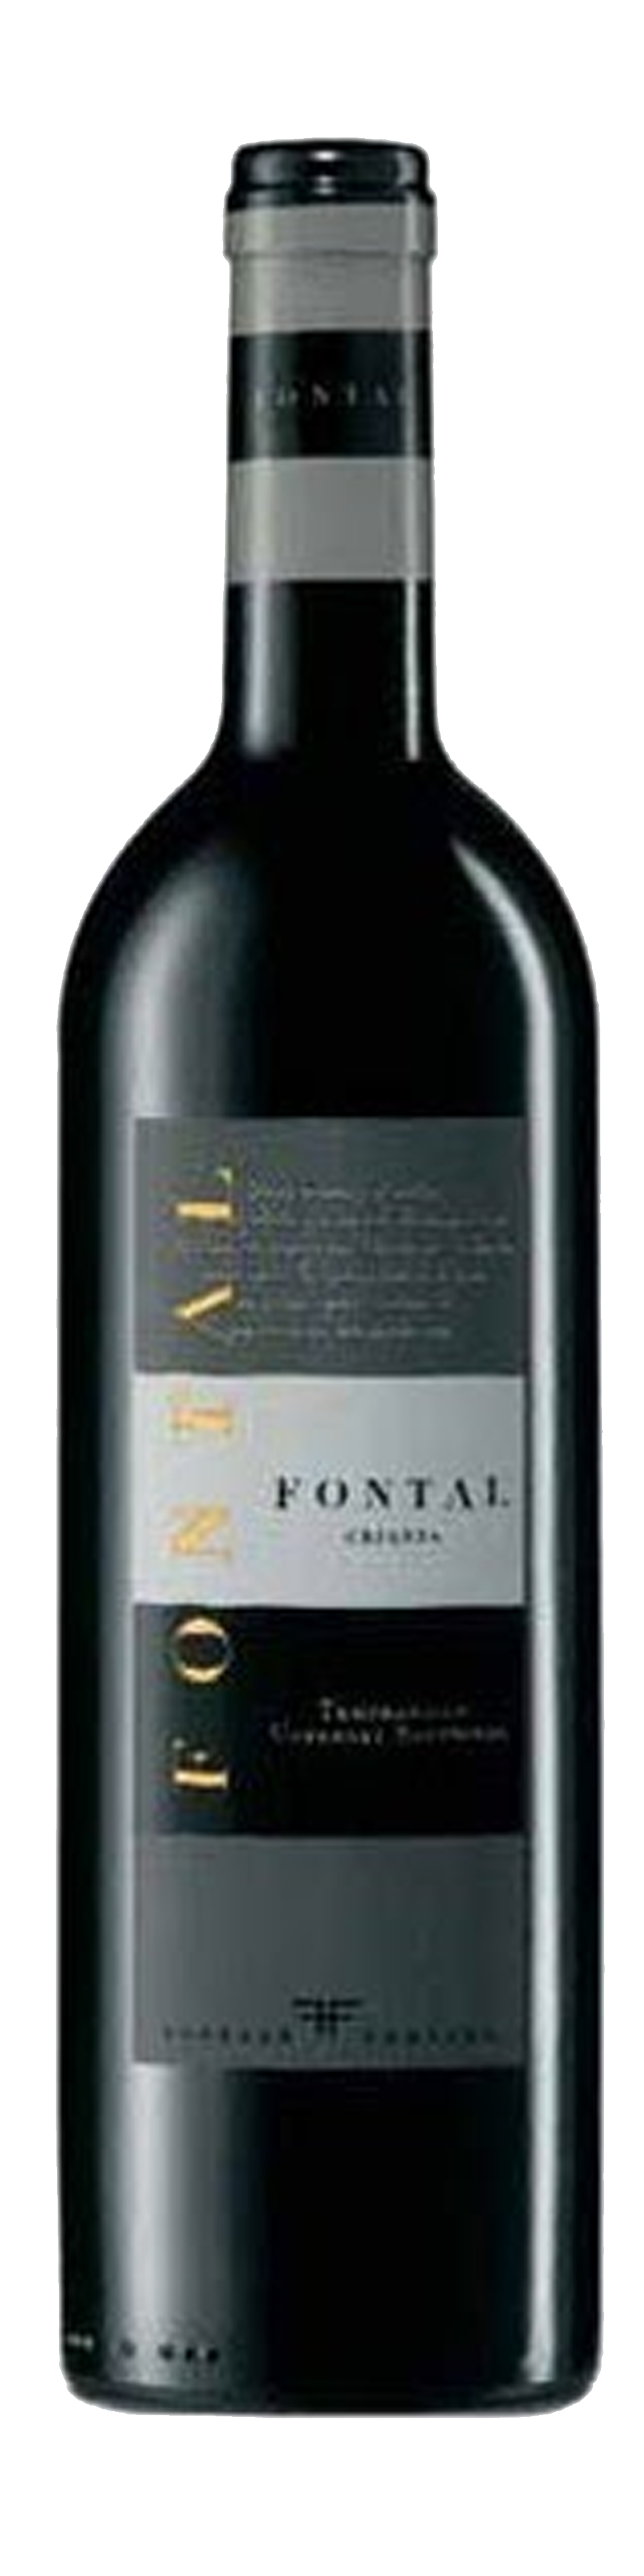 Bottle shot of 2000 Fontal